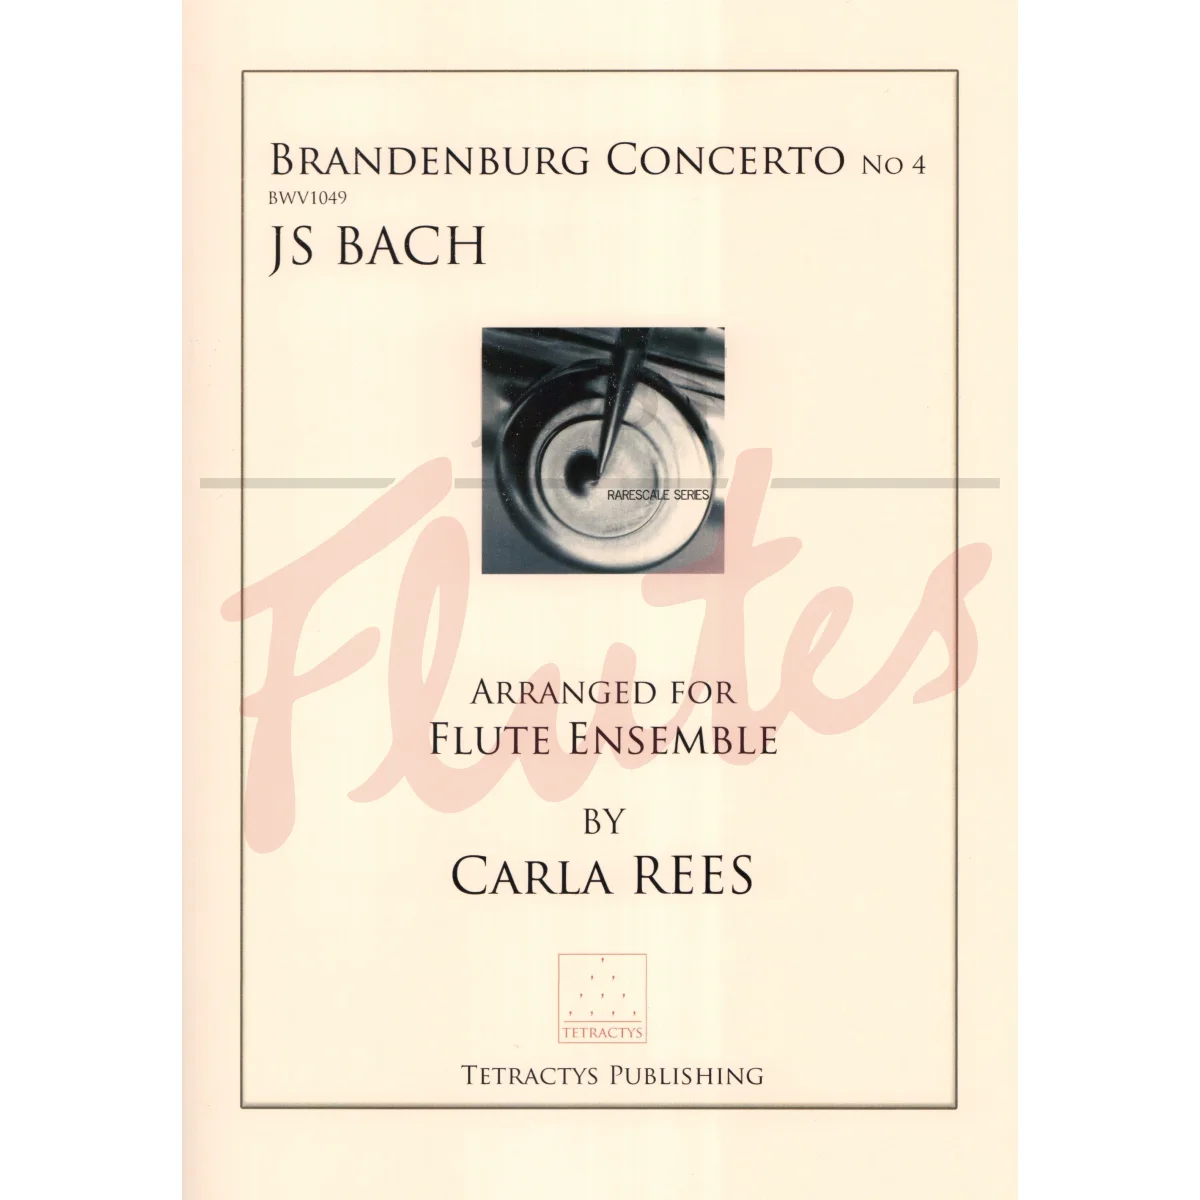 Brandenburg Concerto No. 4 in G major for Flute Ensemble